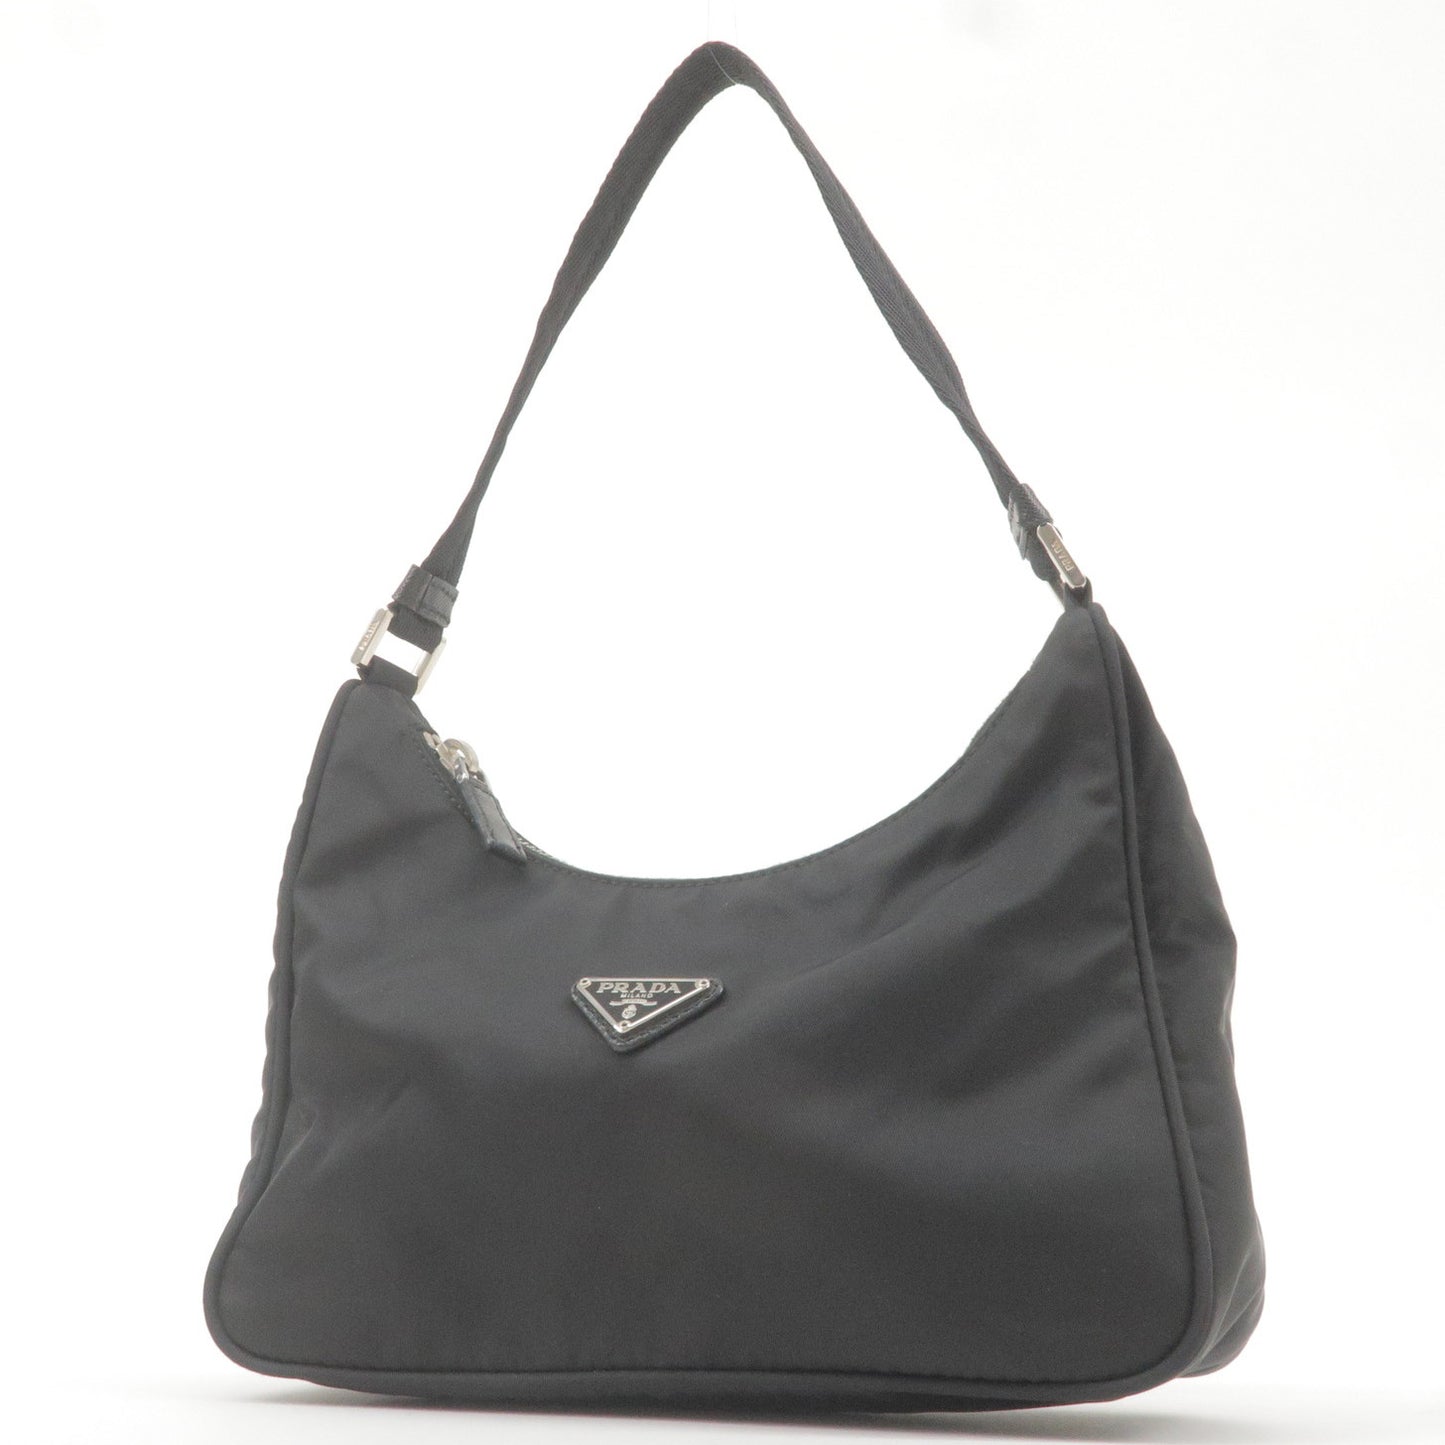 Prada Bag Authentic Prada Nylon Cargo Shoulder Bag in Black 